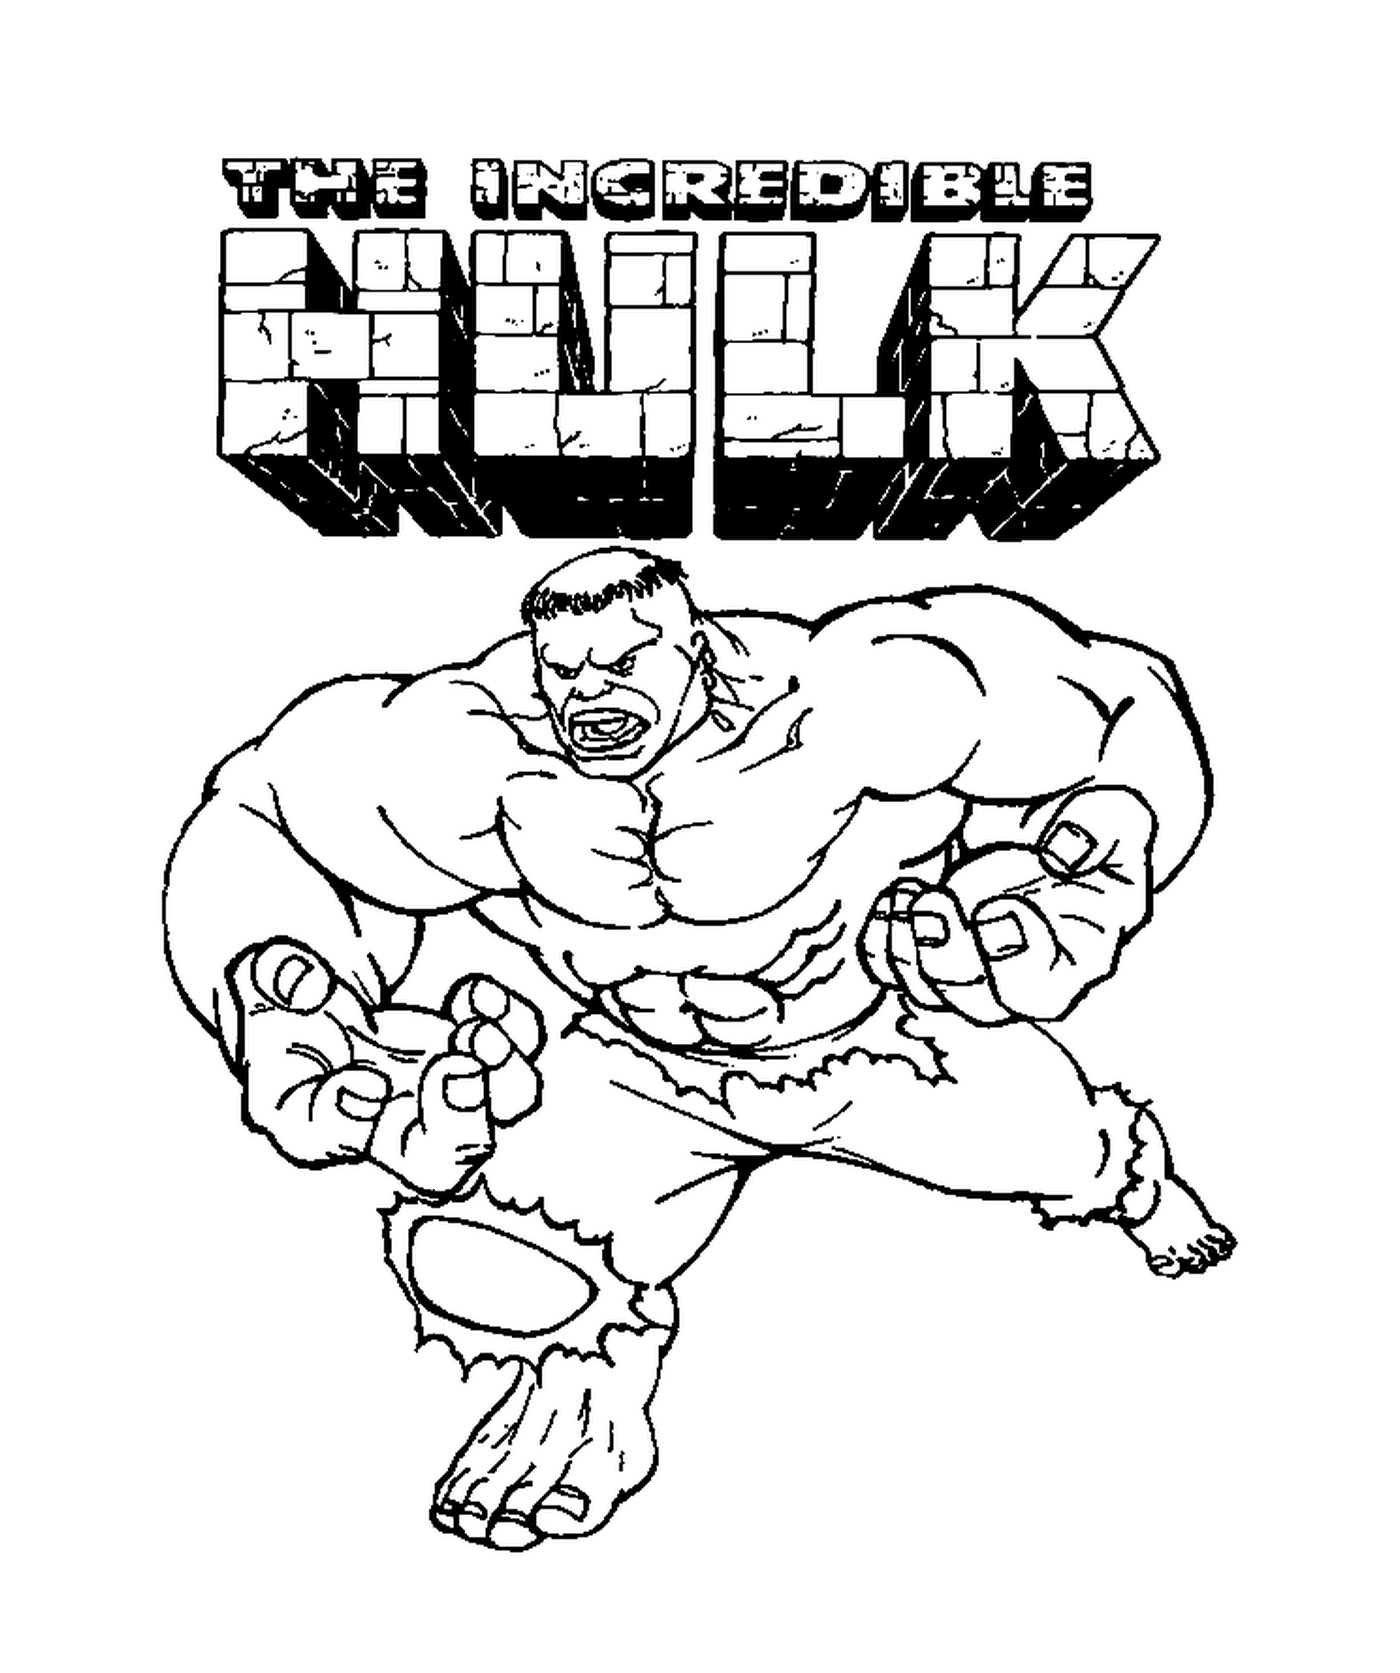  The Incredible Hulk, cartoon character 